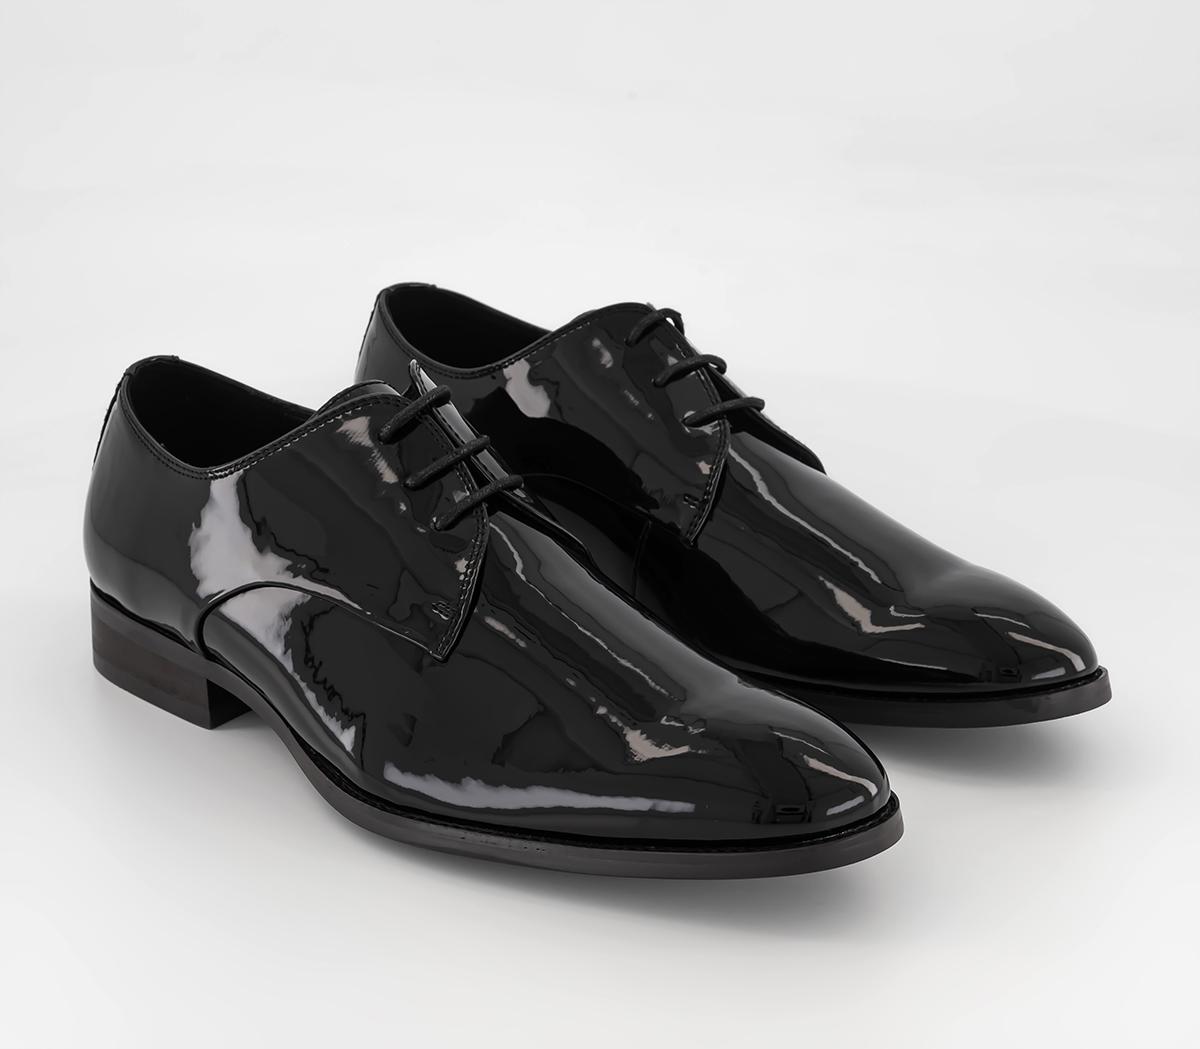 OFFICE Marsden 3 Eye Patent Derby Shoes Black Patent - Men’s Smart Shoes